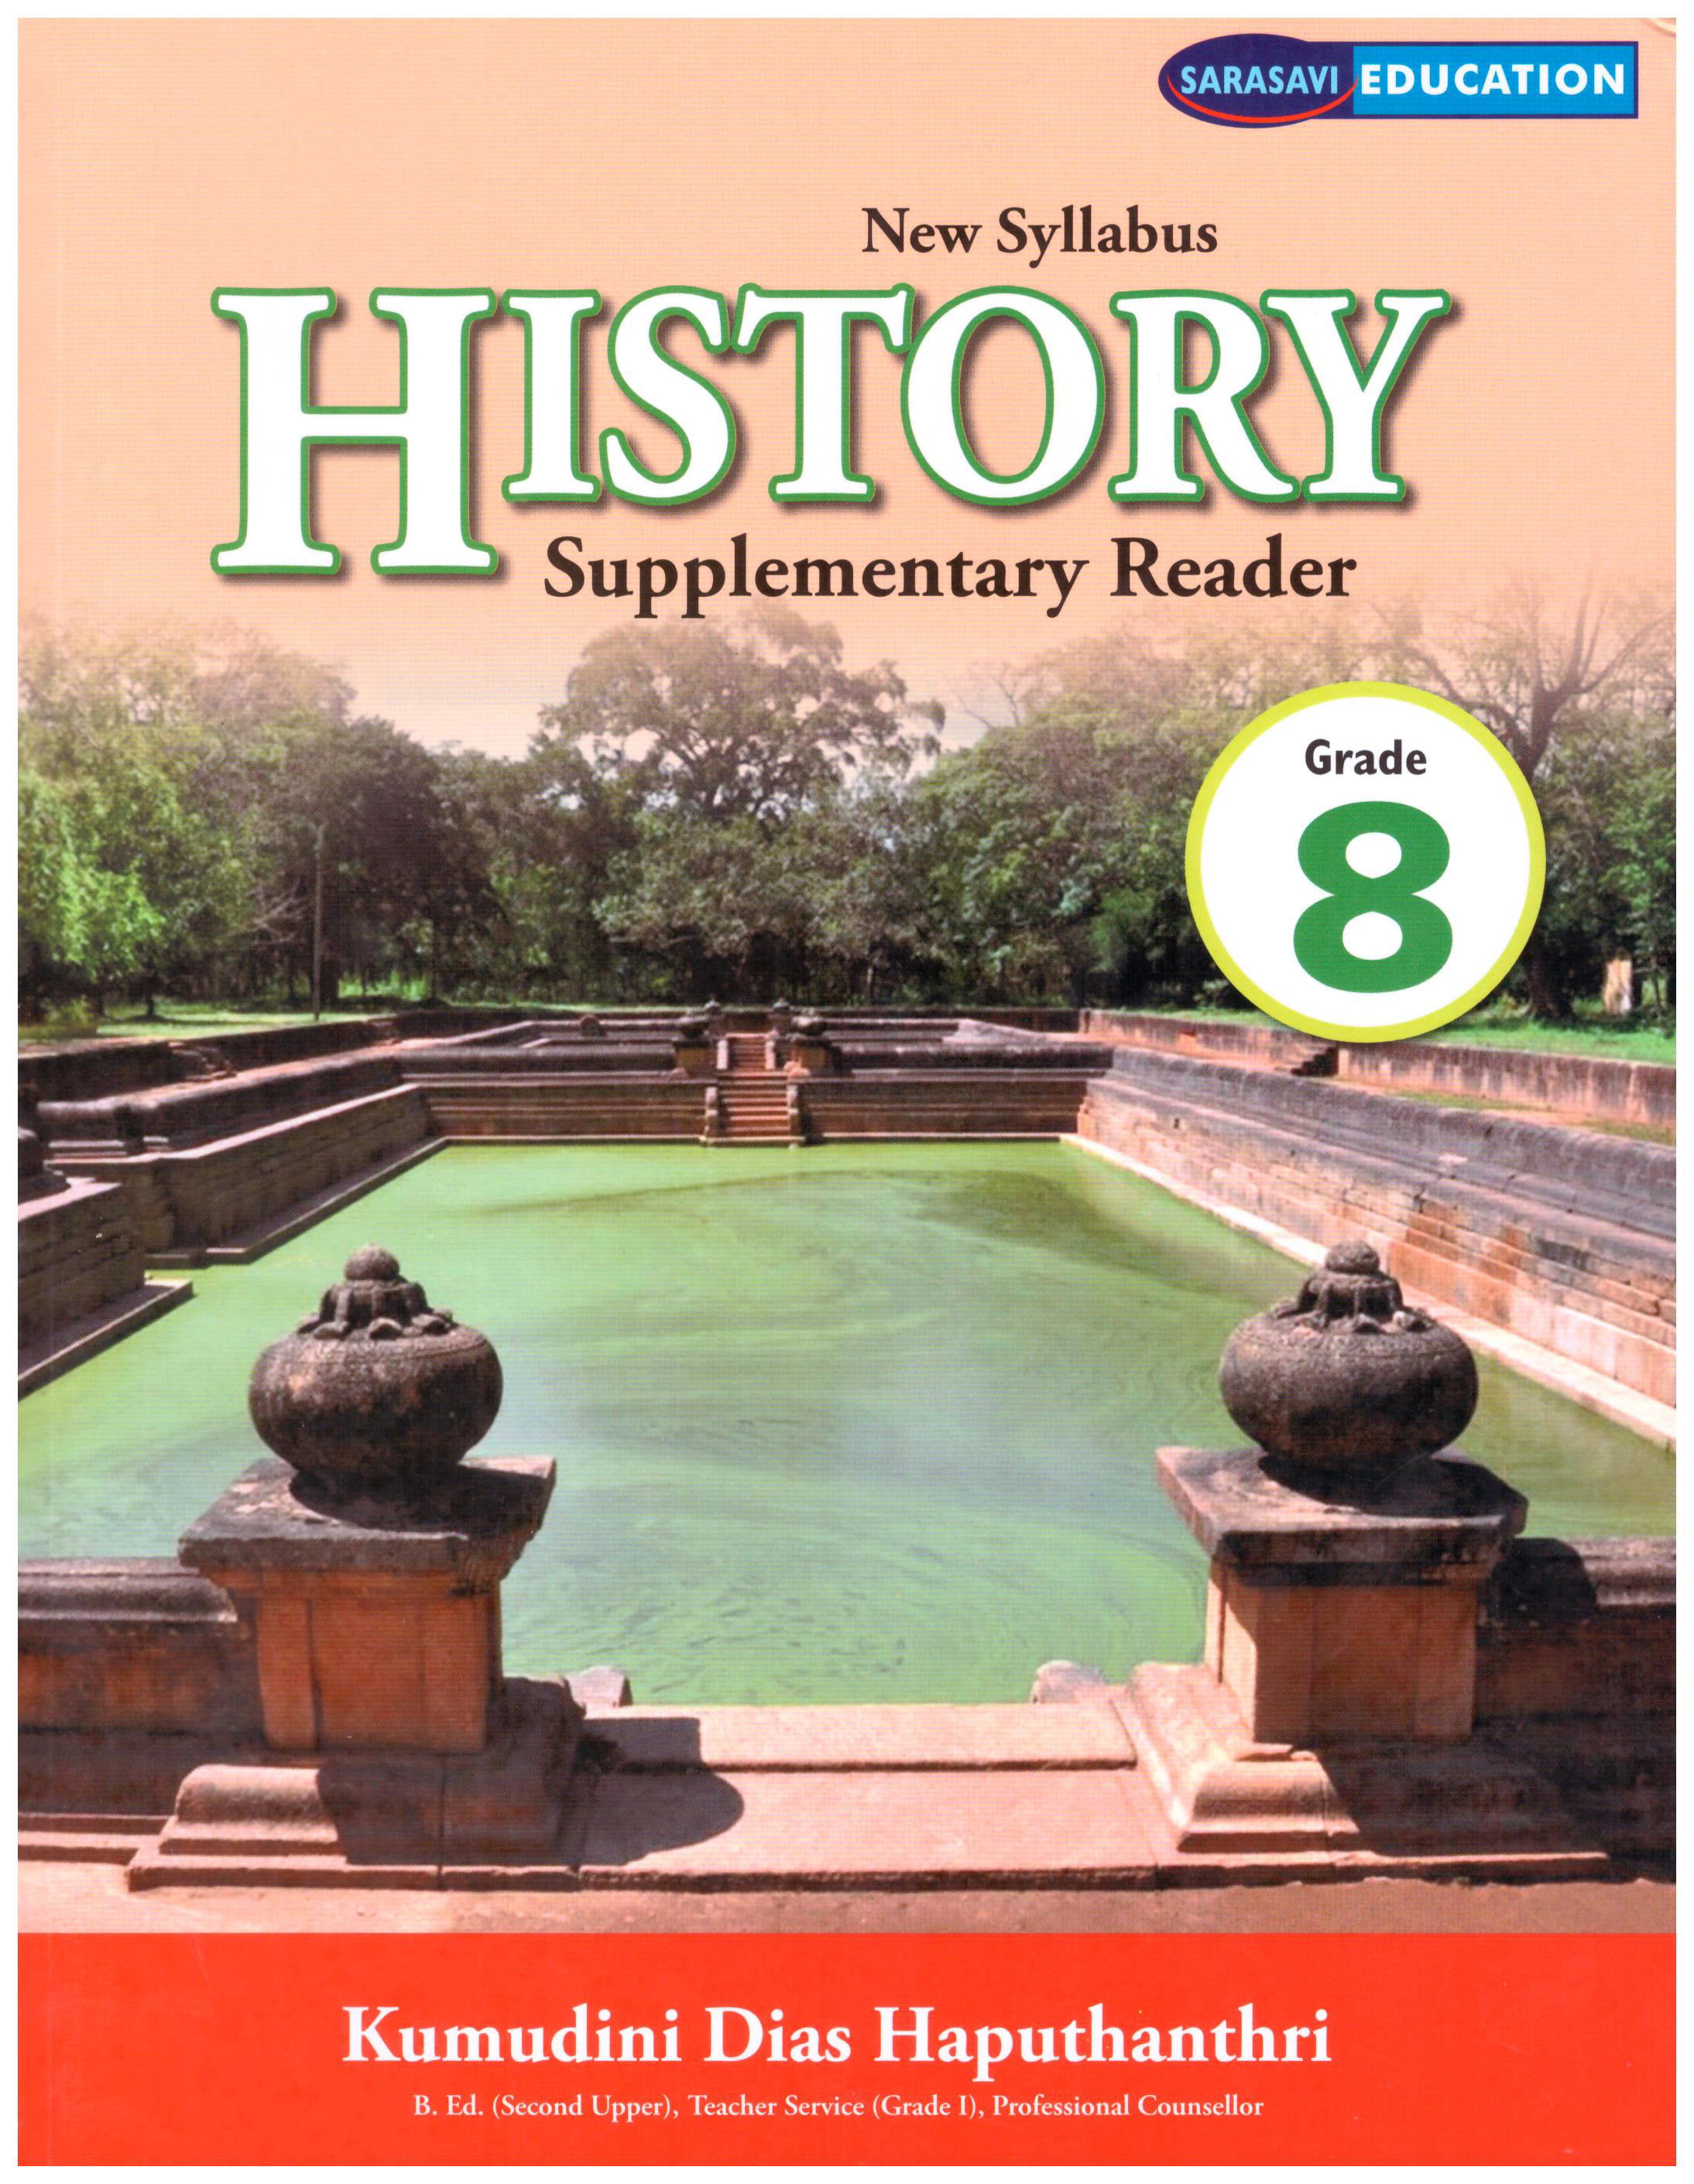 History Supplementary Reader Grade 8 - New Syllabus